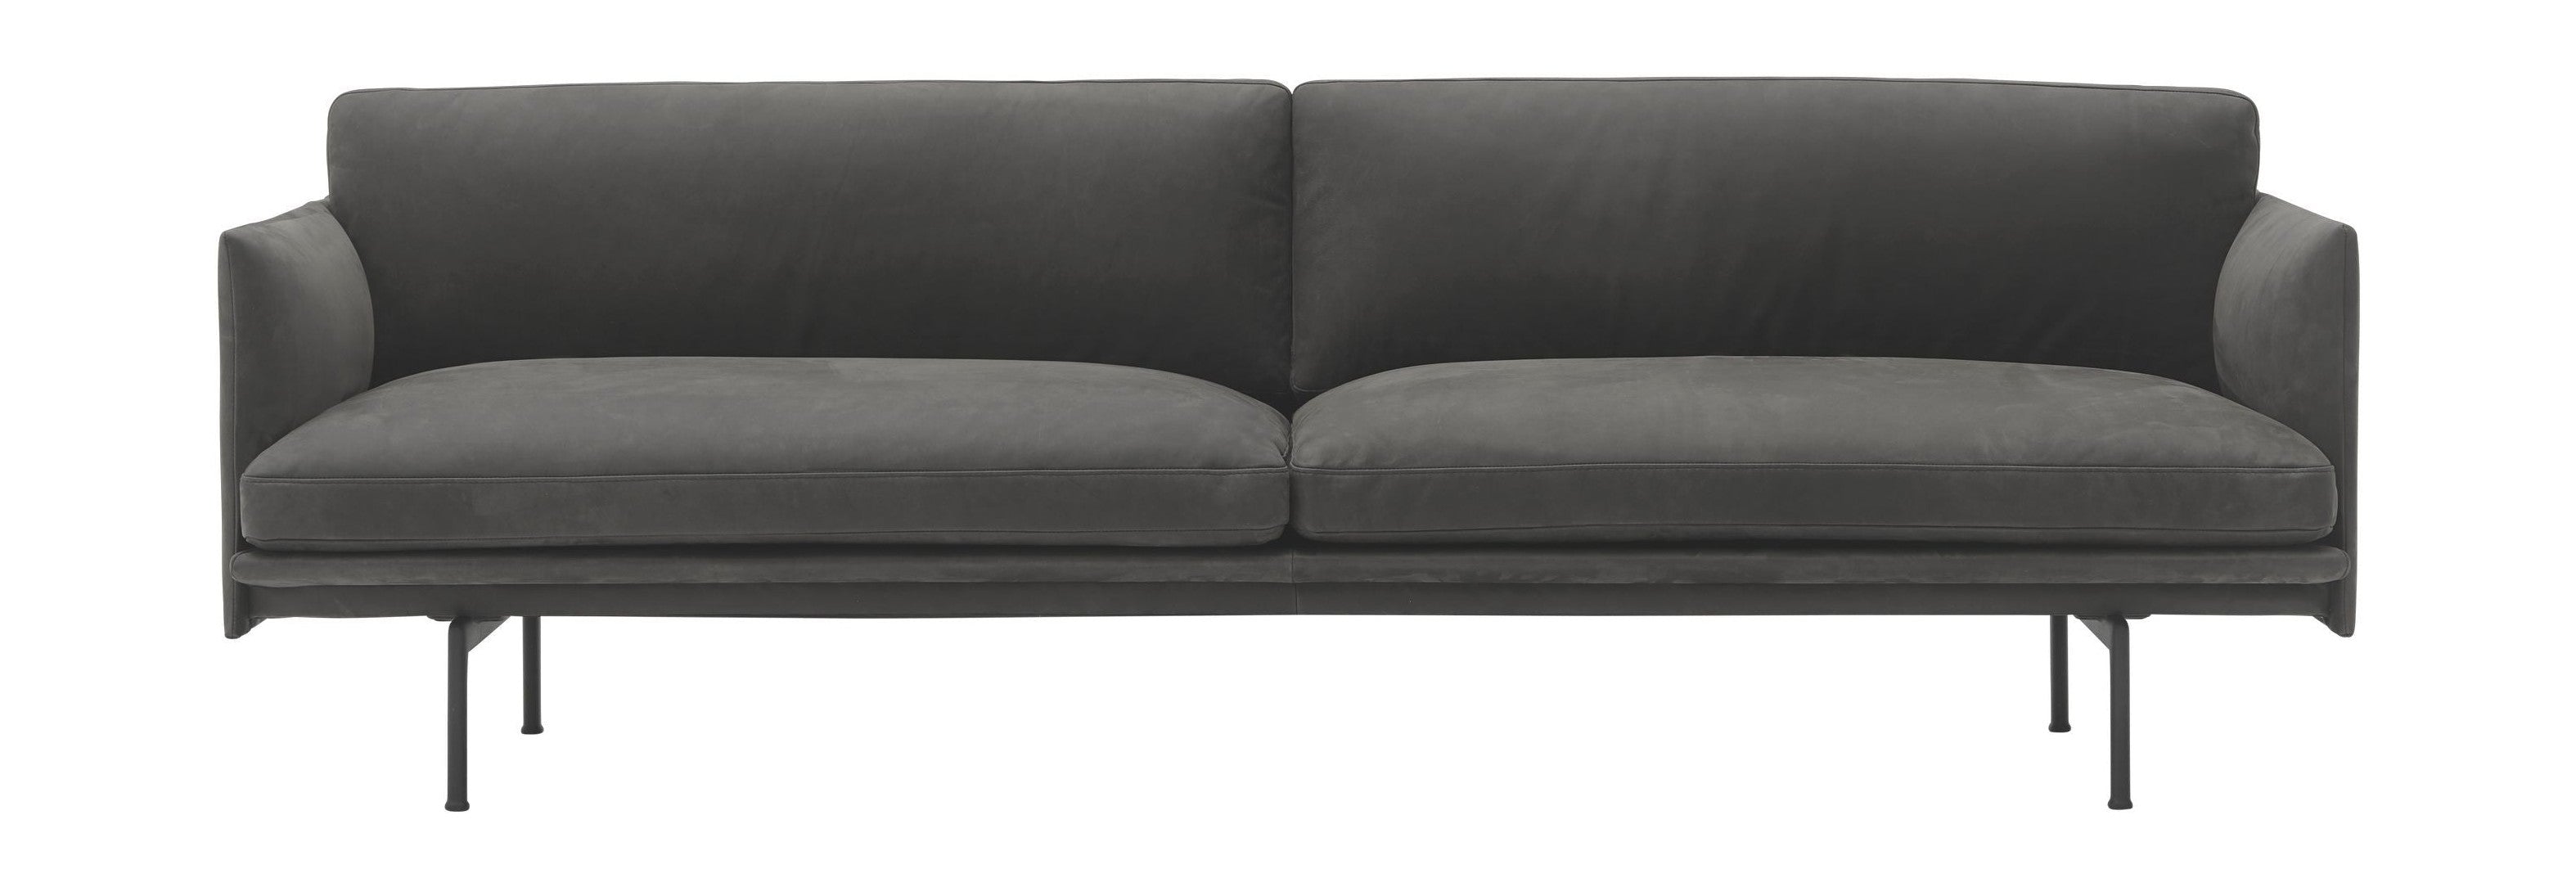 Muuto Outline Sofa 3 Seater Grace Leather, Grey/Black